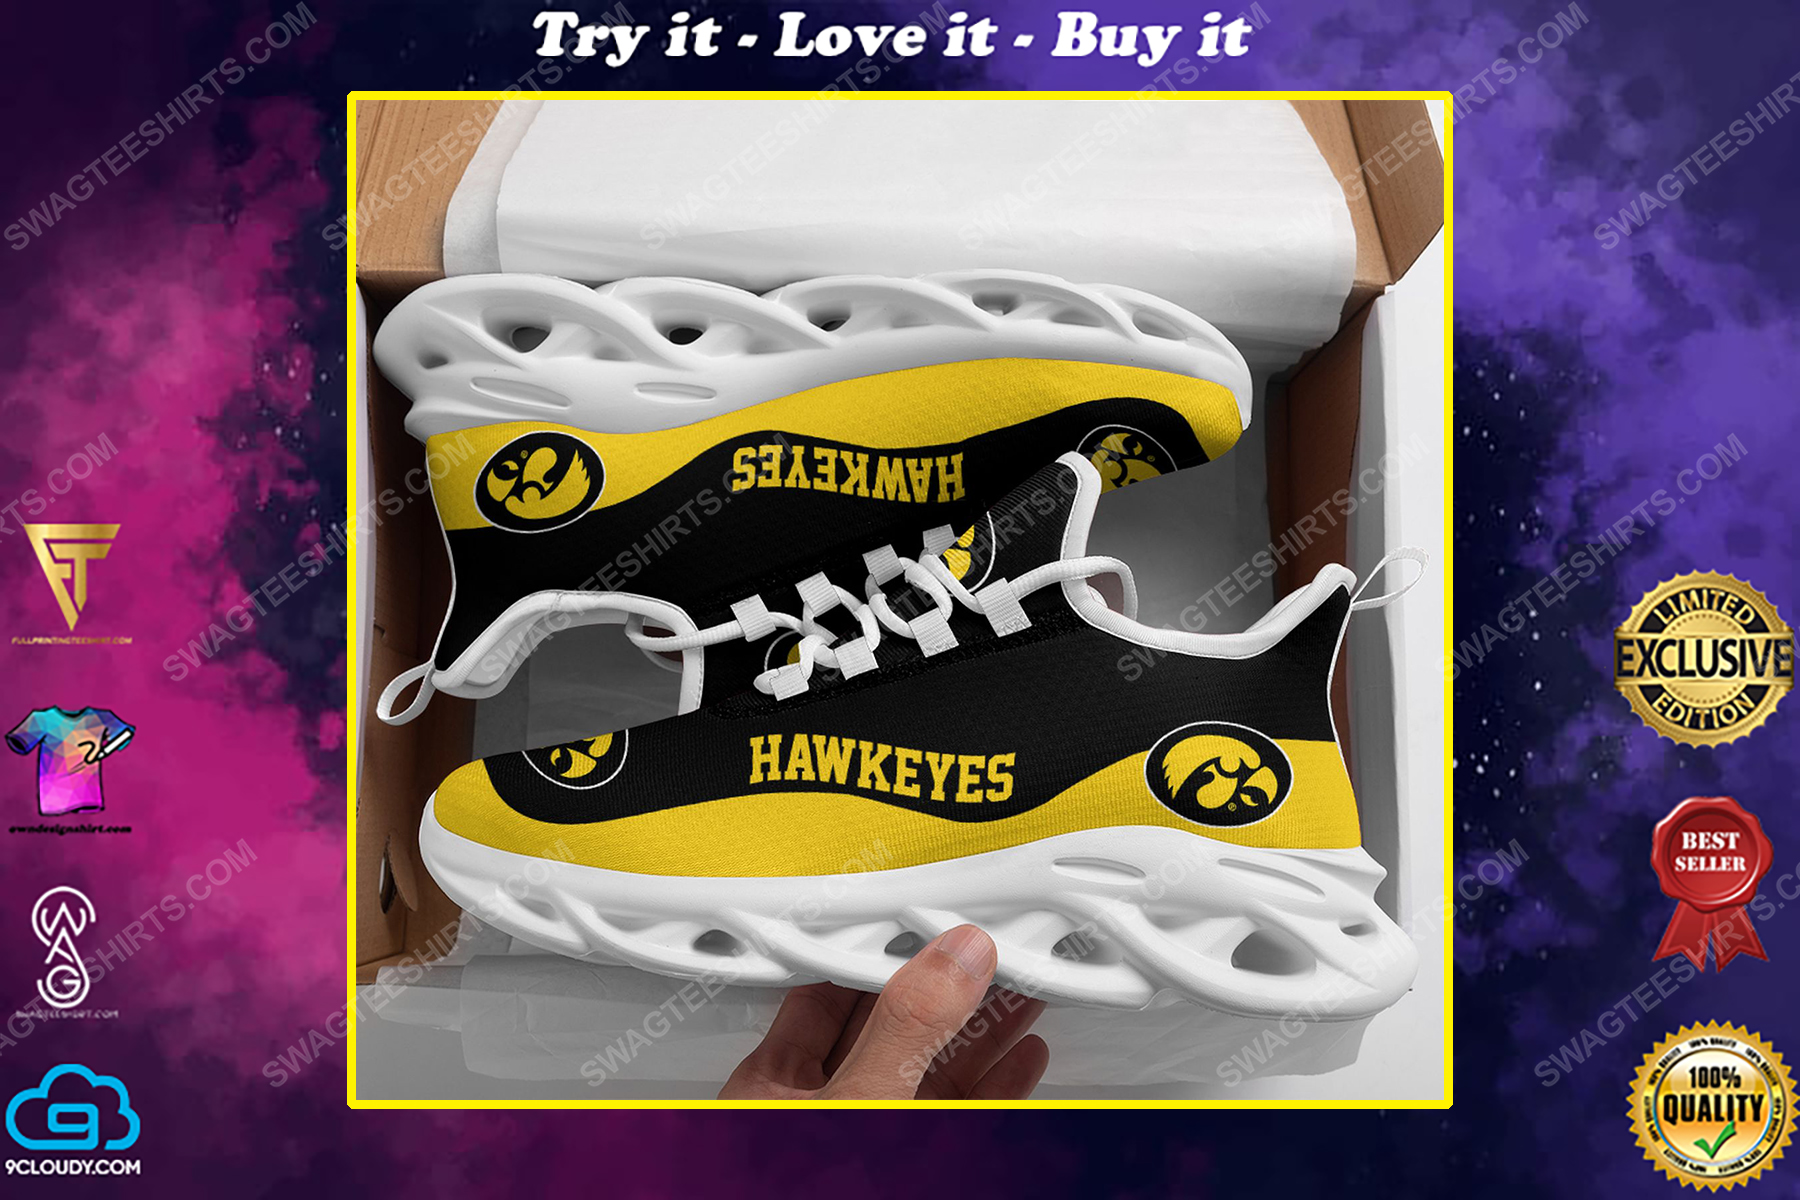 The iowa hawkeyes football team max soul shoes